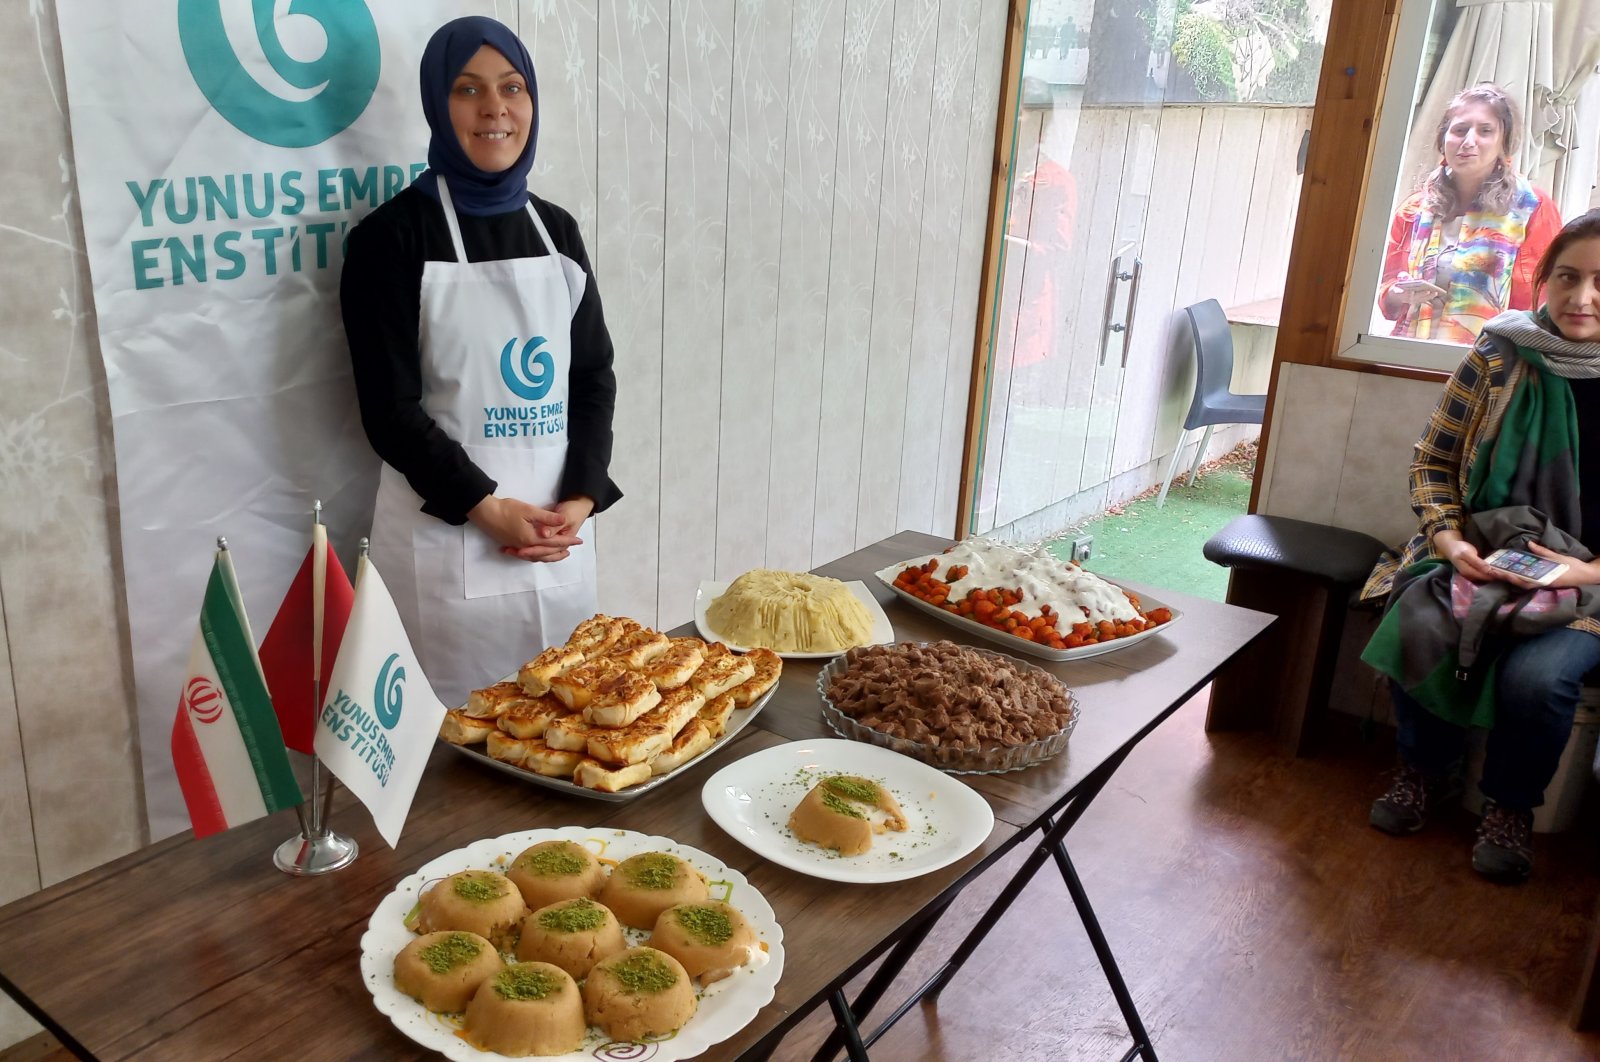 YEE menyelenggarakan lokakarya masakan Turki di ibu kota Iran, Teheran